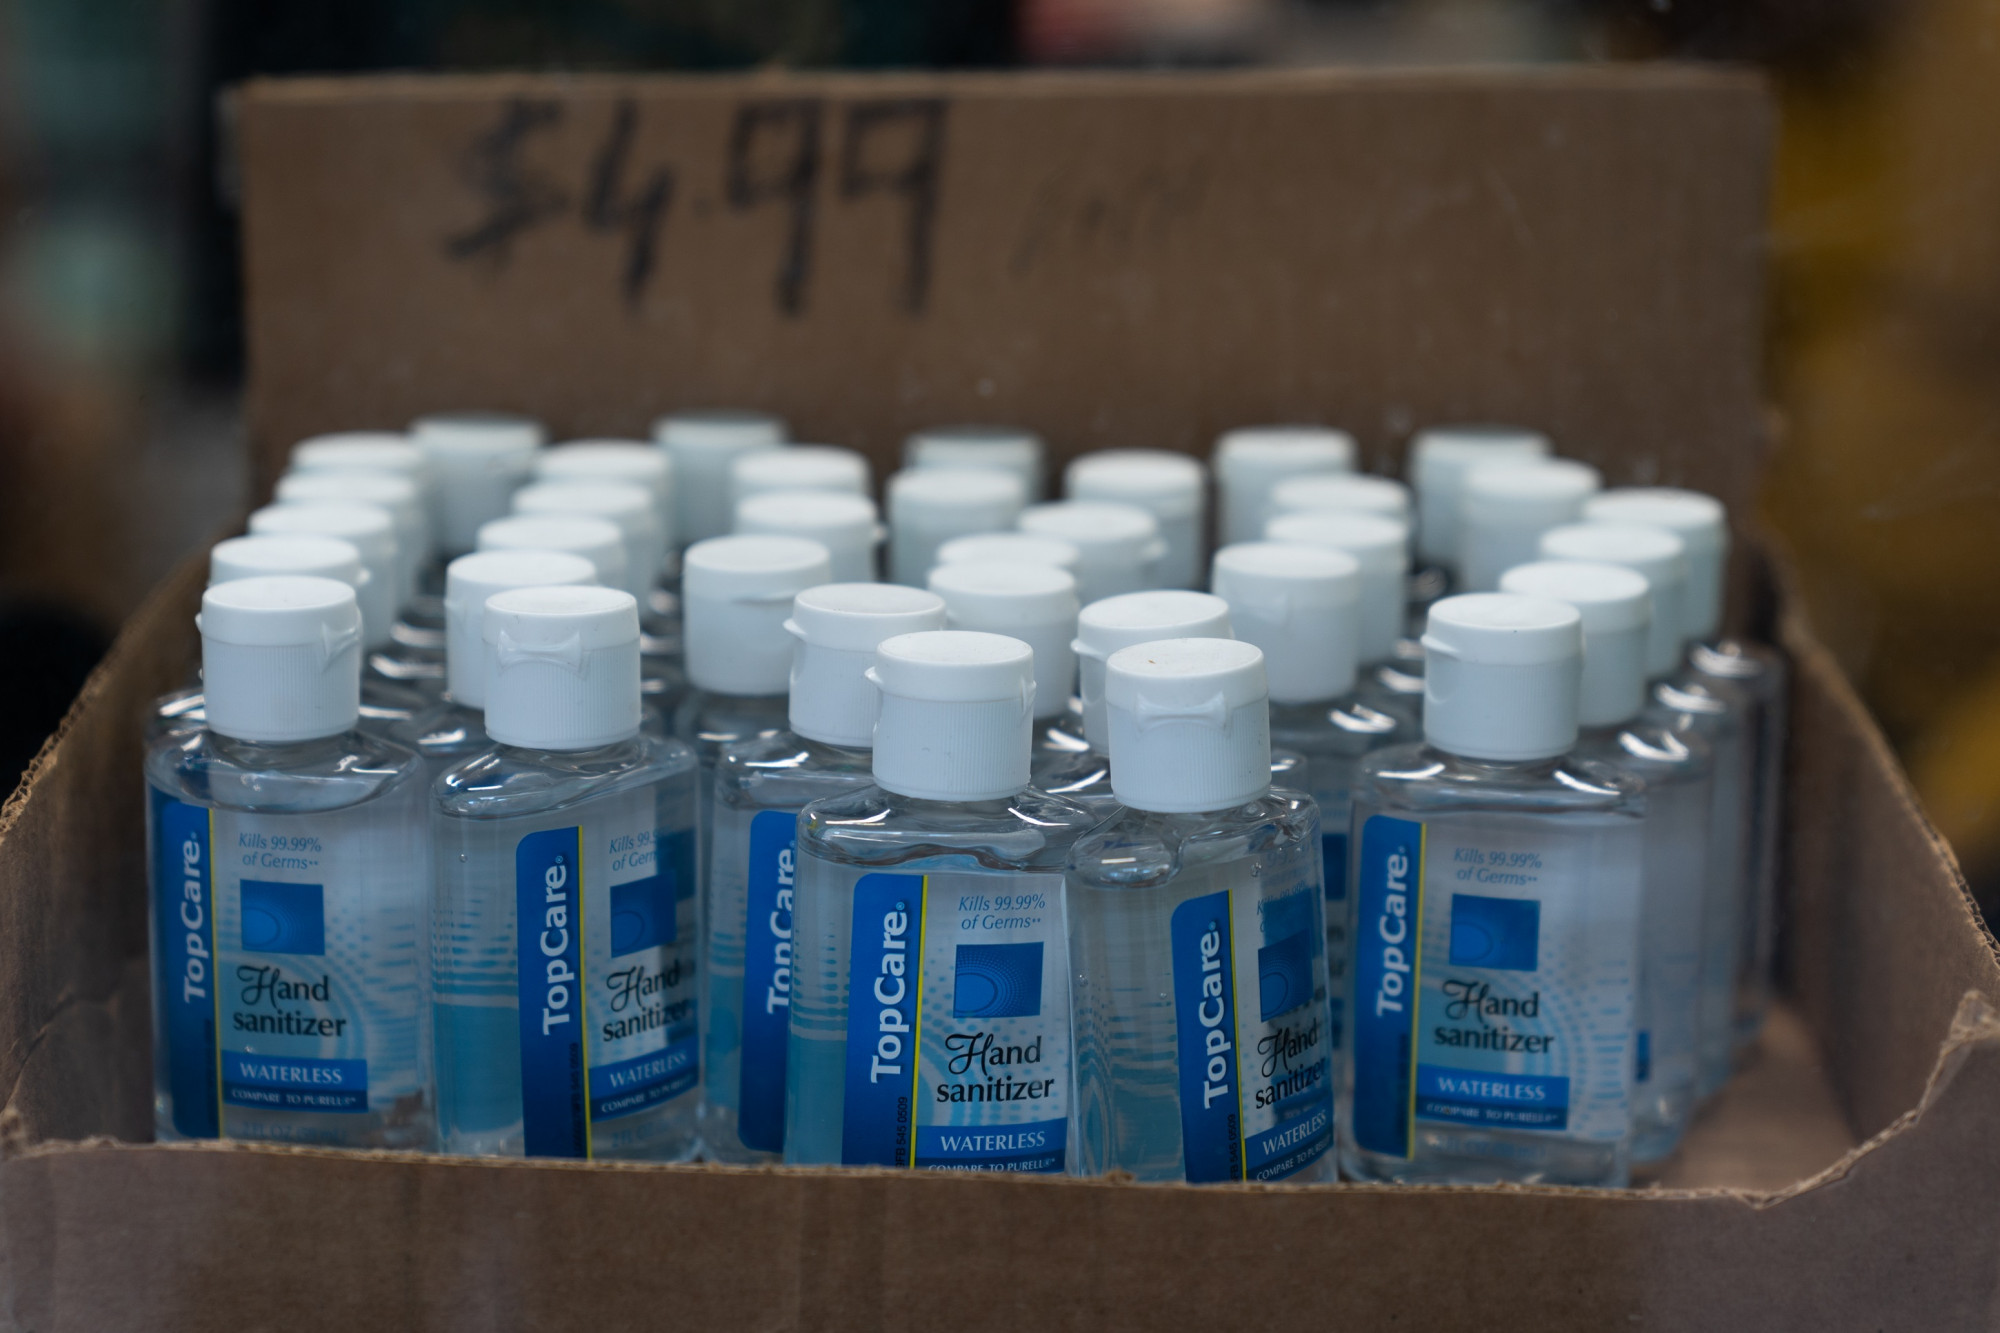 Luxury Perfumer LVMH to Use Factories to Produce Hand Sanitizer Amid the  Coronavirus Outbreak